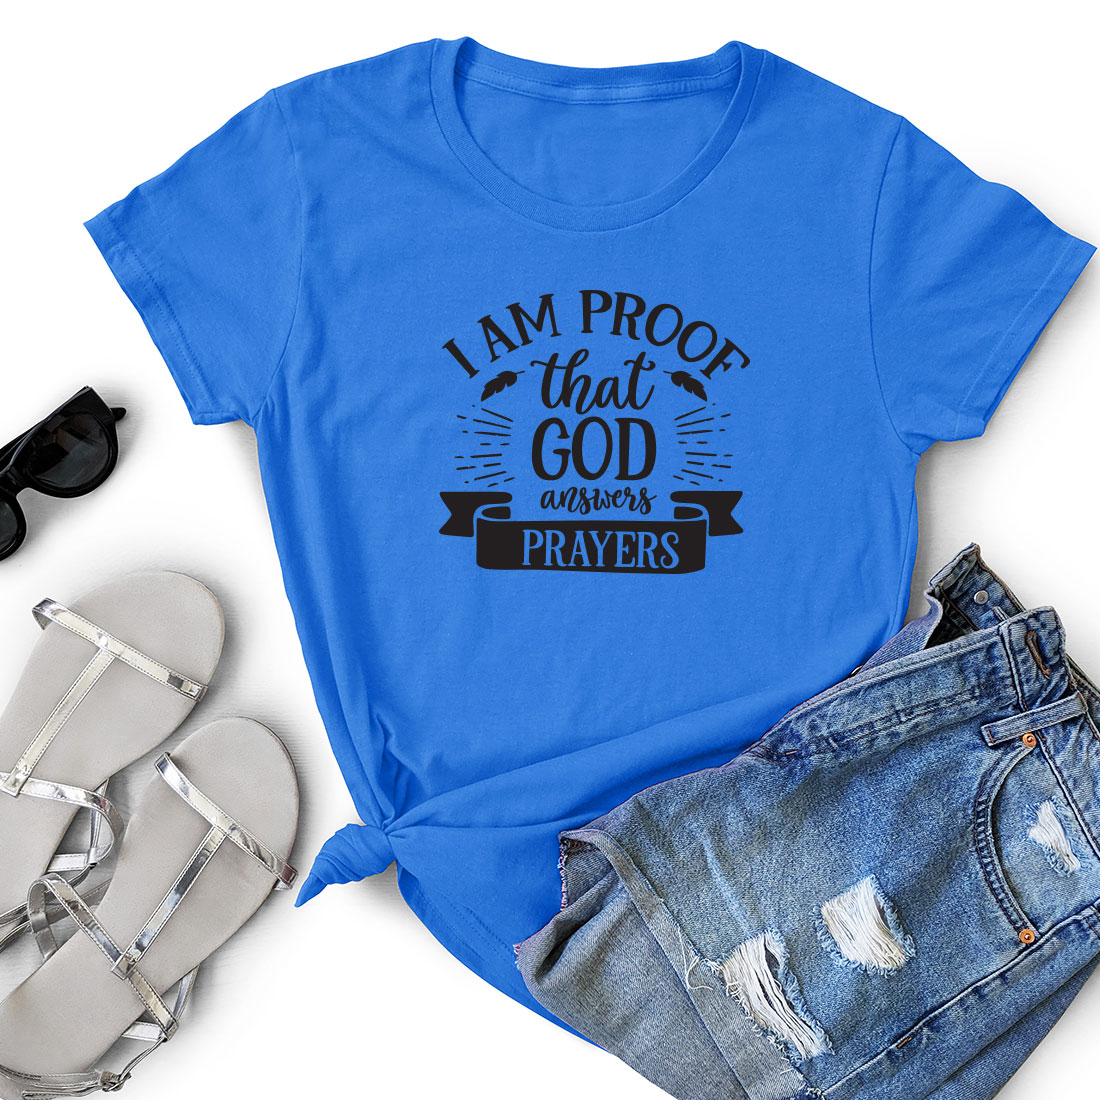 T - shirt that says i am proof that god always prays.